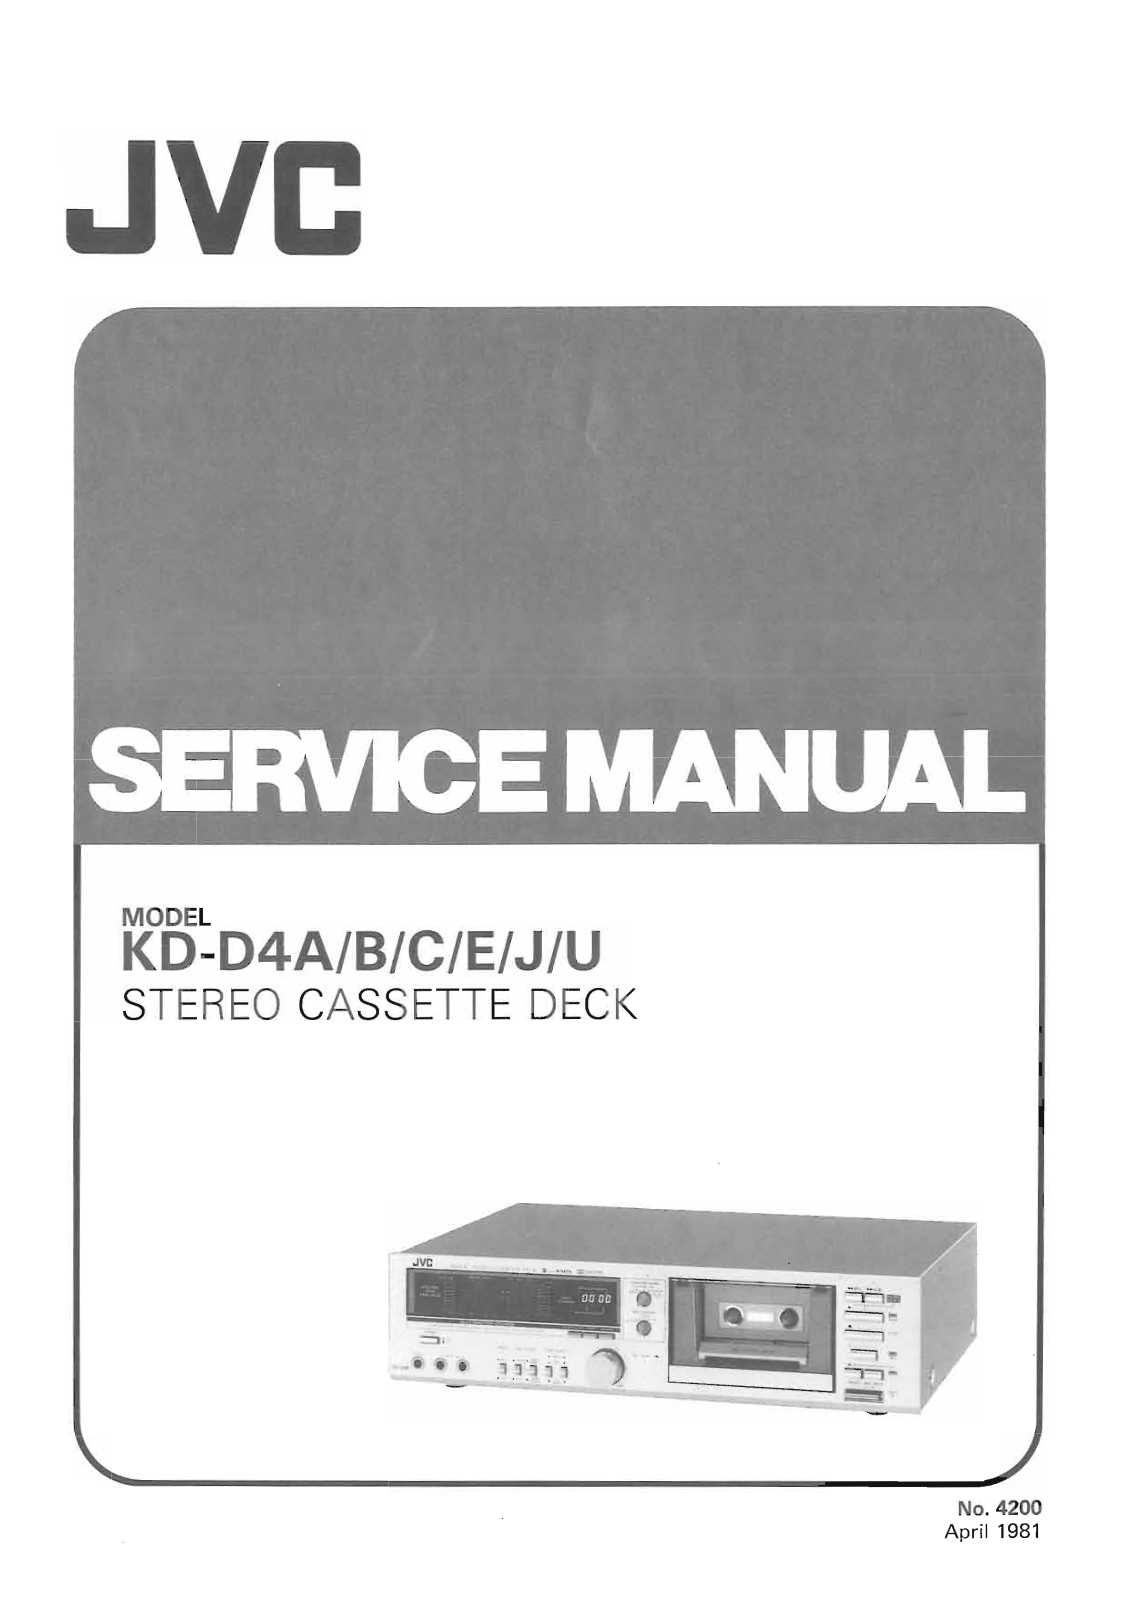 Jvc KD-D4 Service Manual